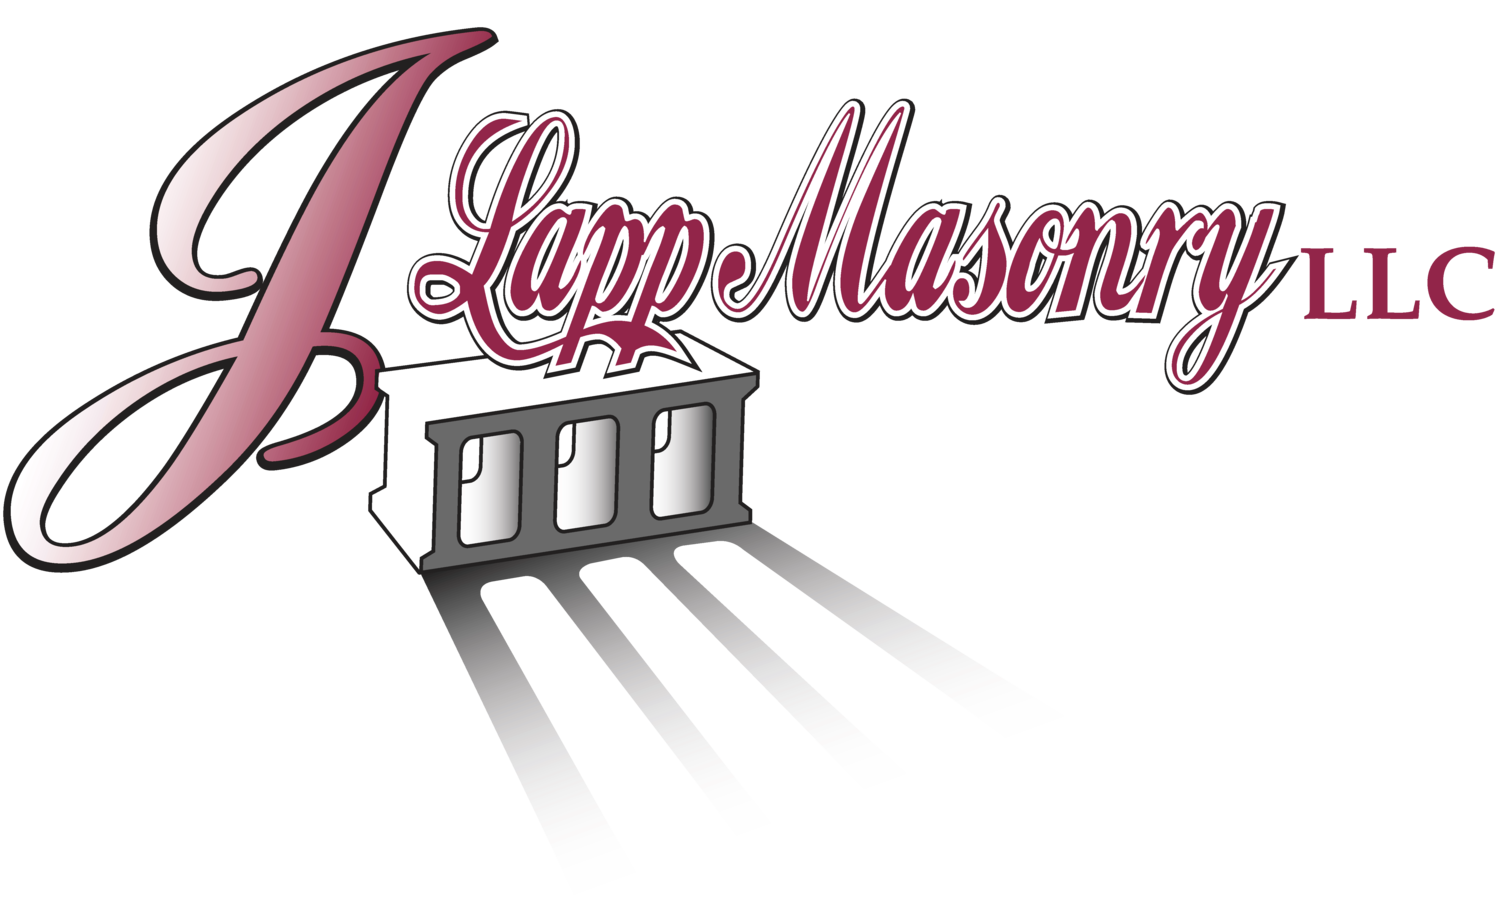 J. Lapp Masonry, LLC Commercial and Residential Masonry and Concrete